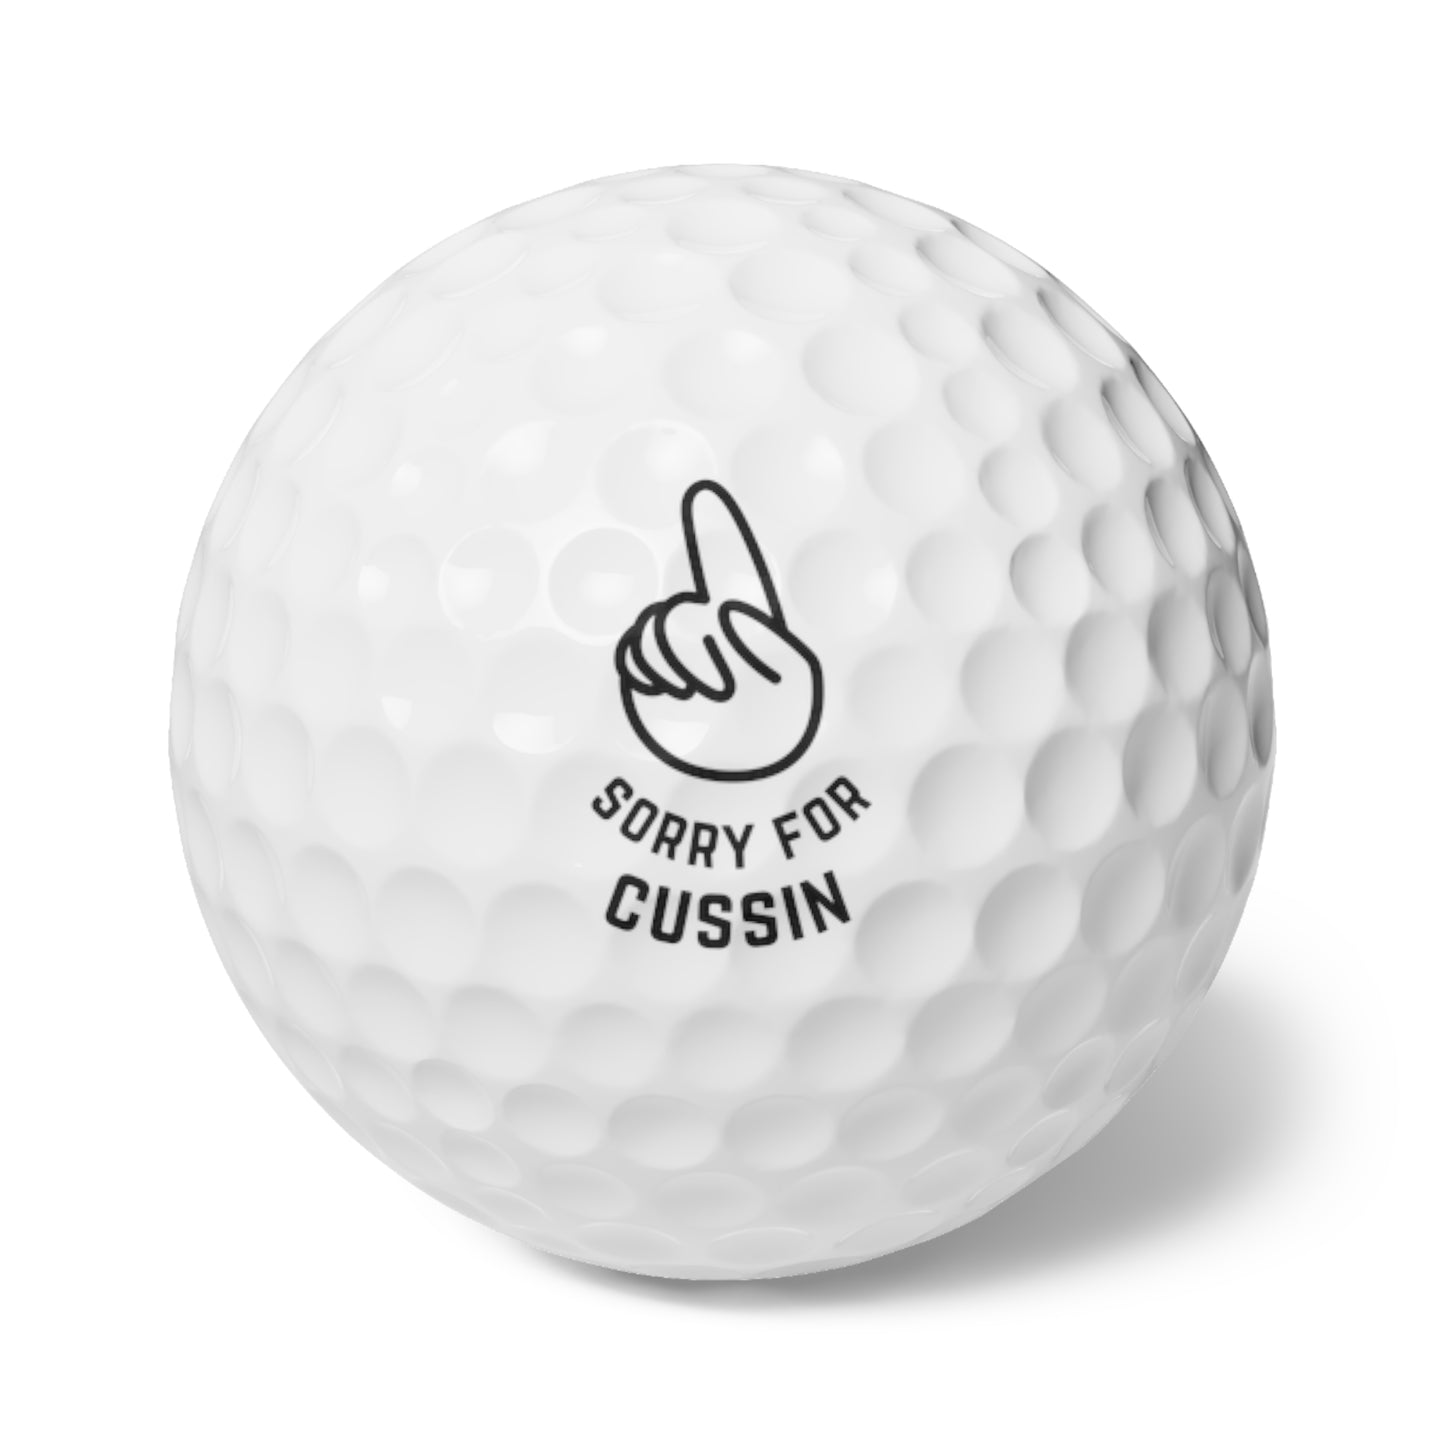 “Sorry for cussin” Golf Balls, 6pcs